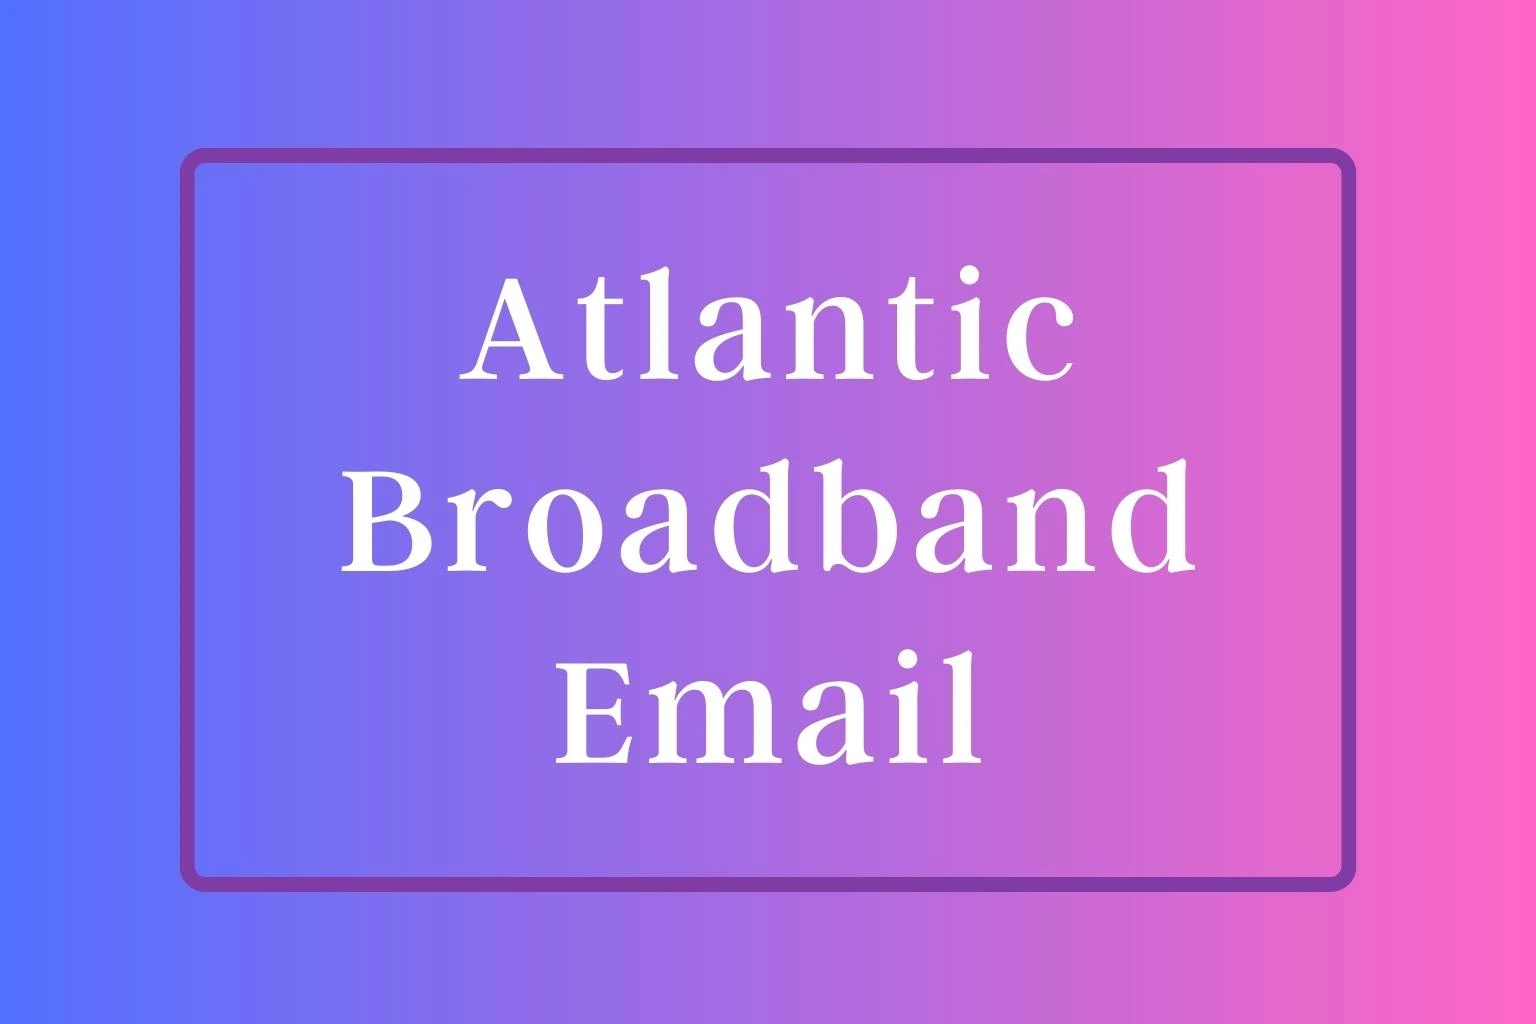 Atlantic Broadband Email